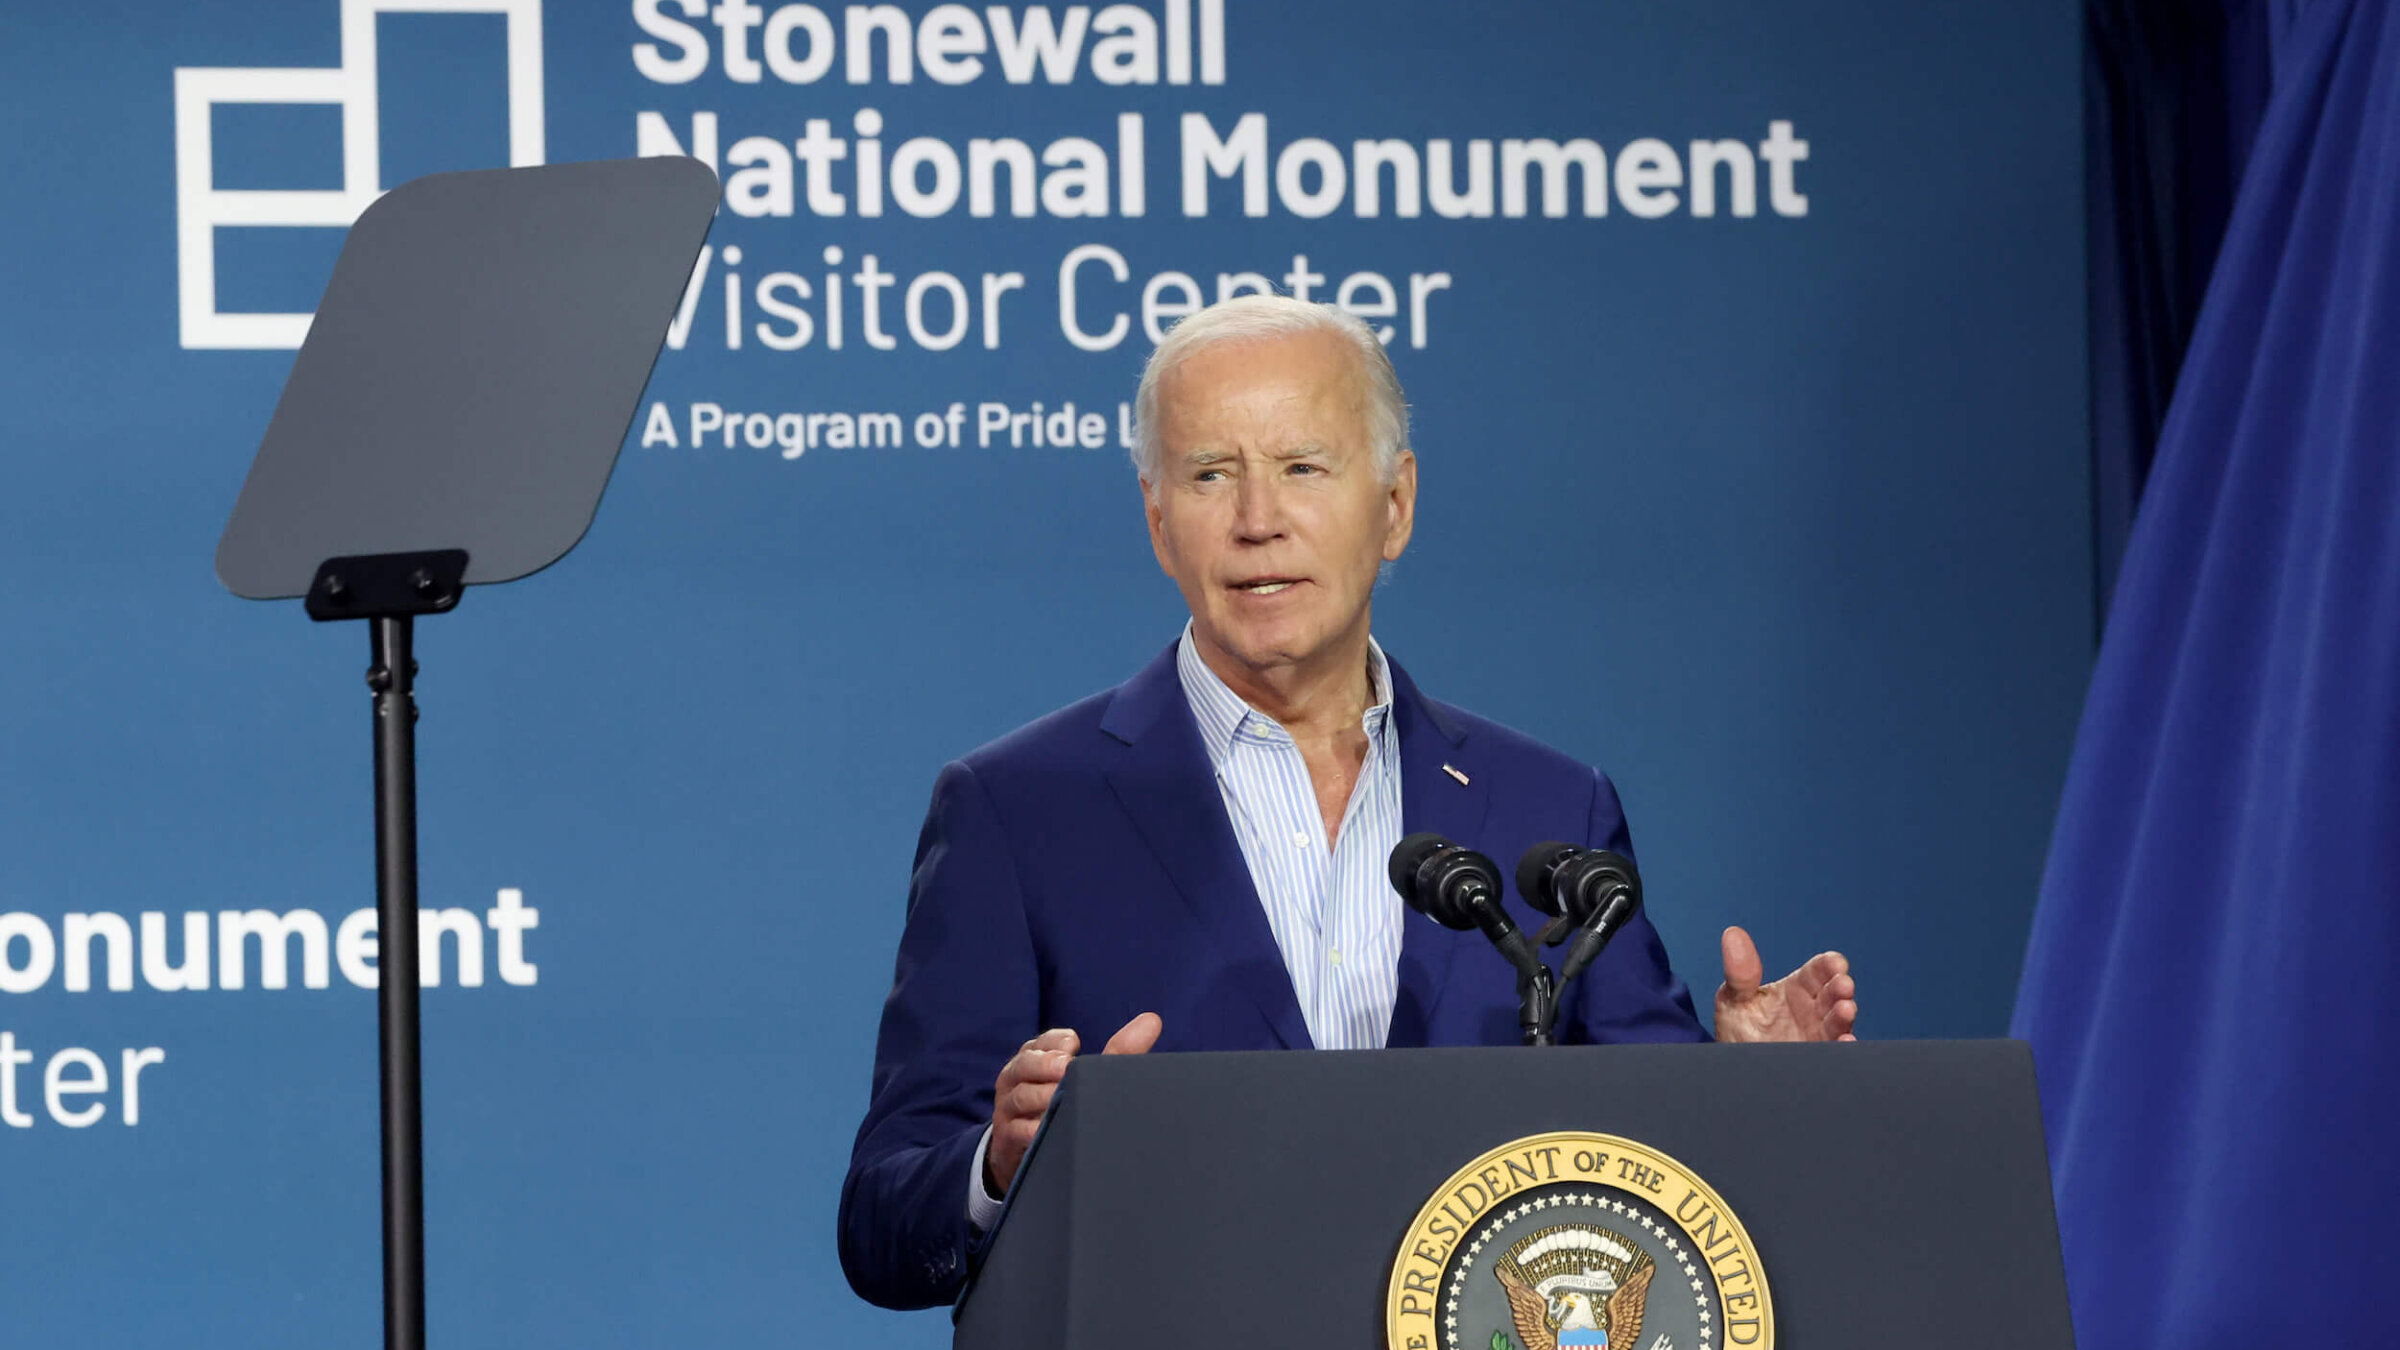 President Joe Biden speaks at the Grand Opening Ceremony for the Stonewall National Monument Visitor Center on June 28.